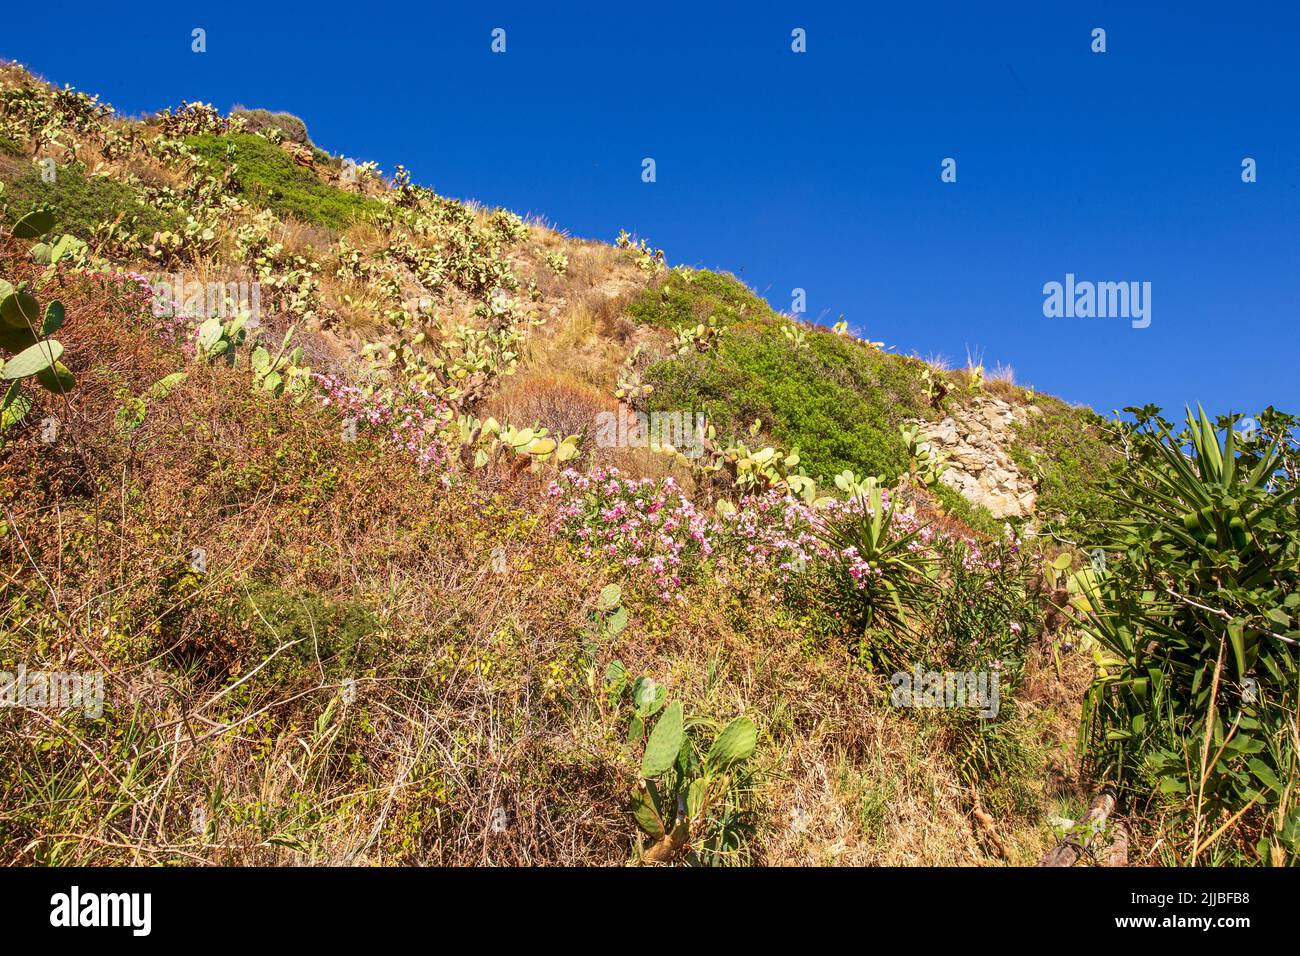 Mediterranean hill at Capo Vaticano, Calabria, Italy Stock Photo